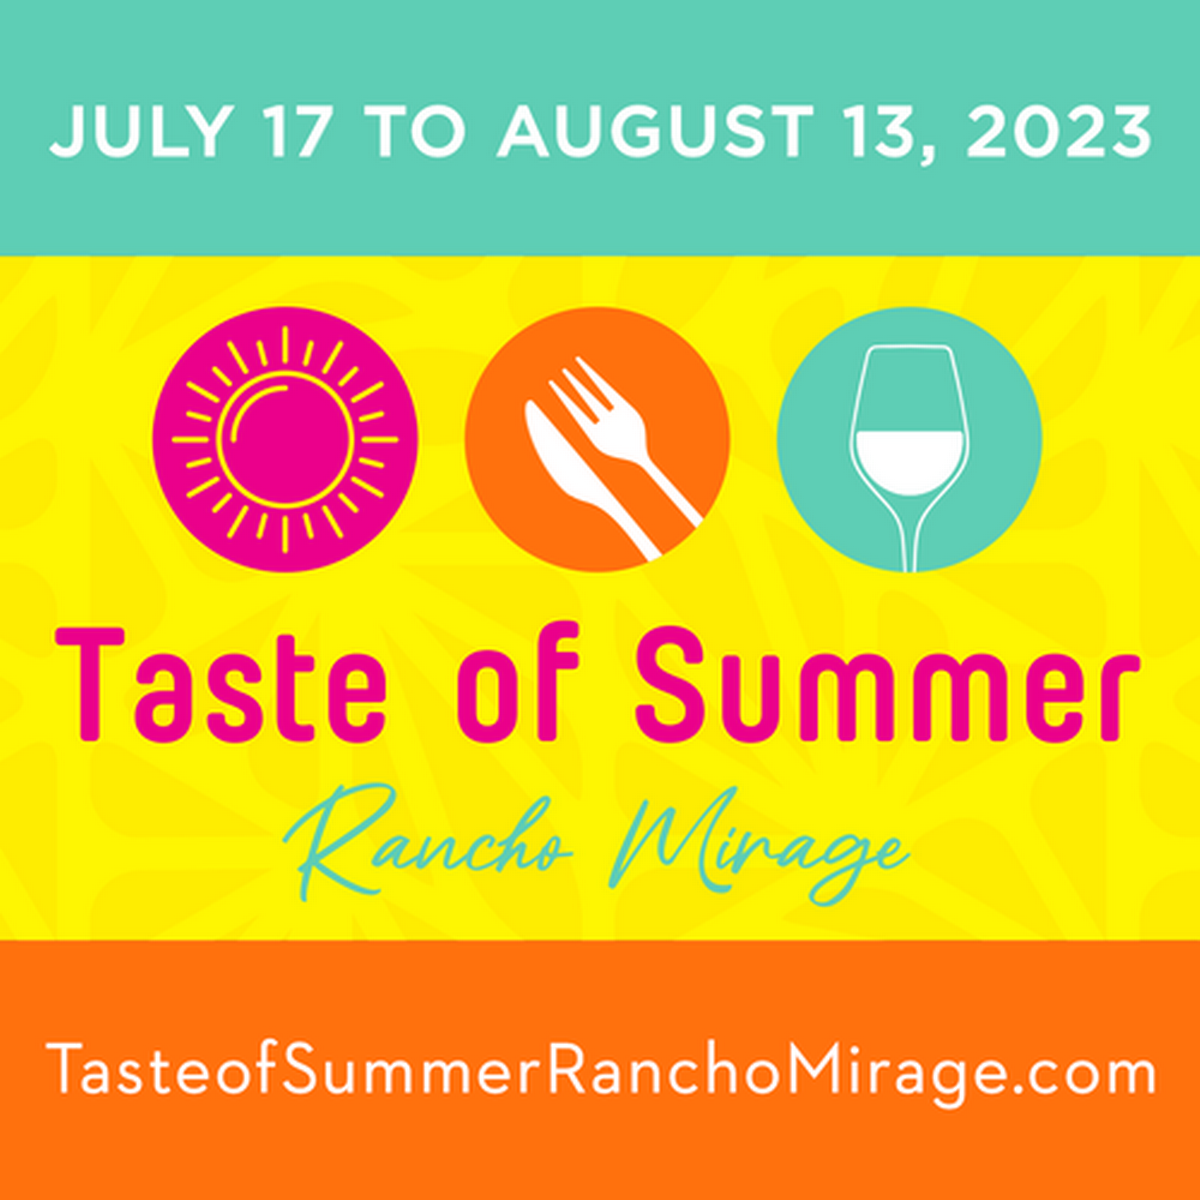 Taste of Summer Rancho Mirage Jul 17, 2023 to Aug 13, 2023